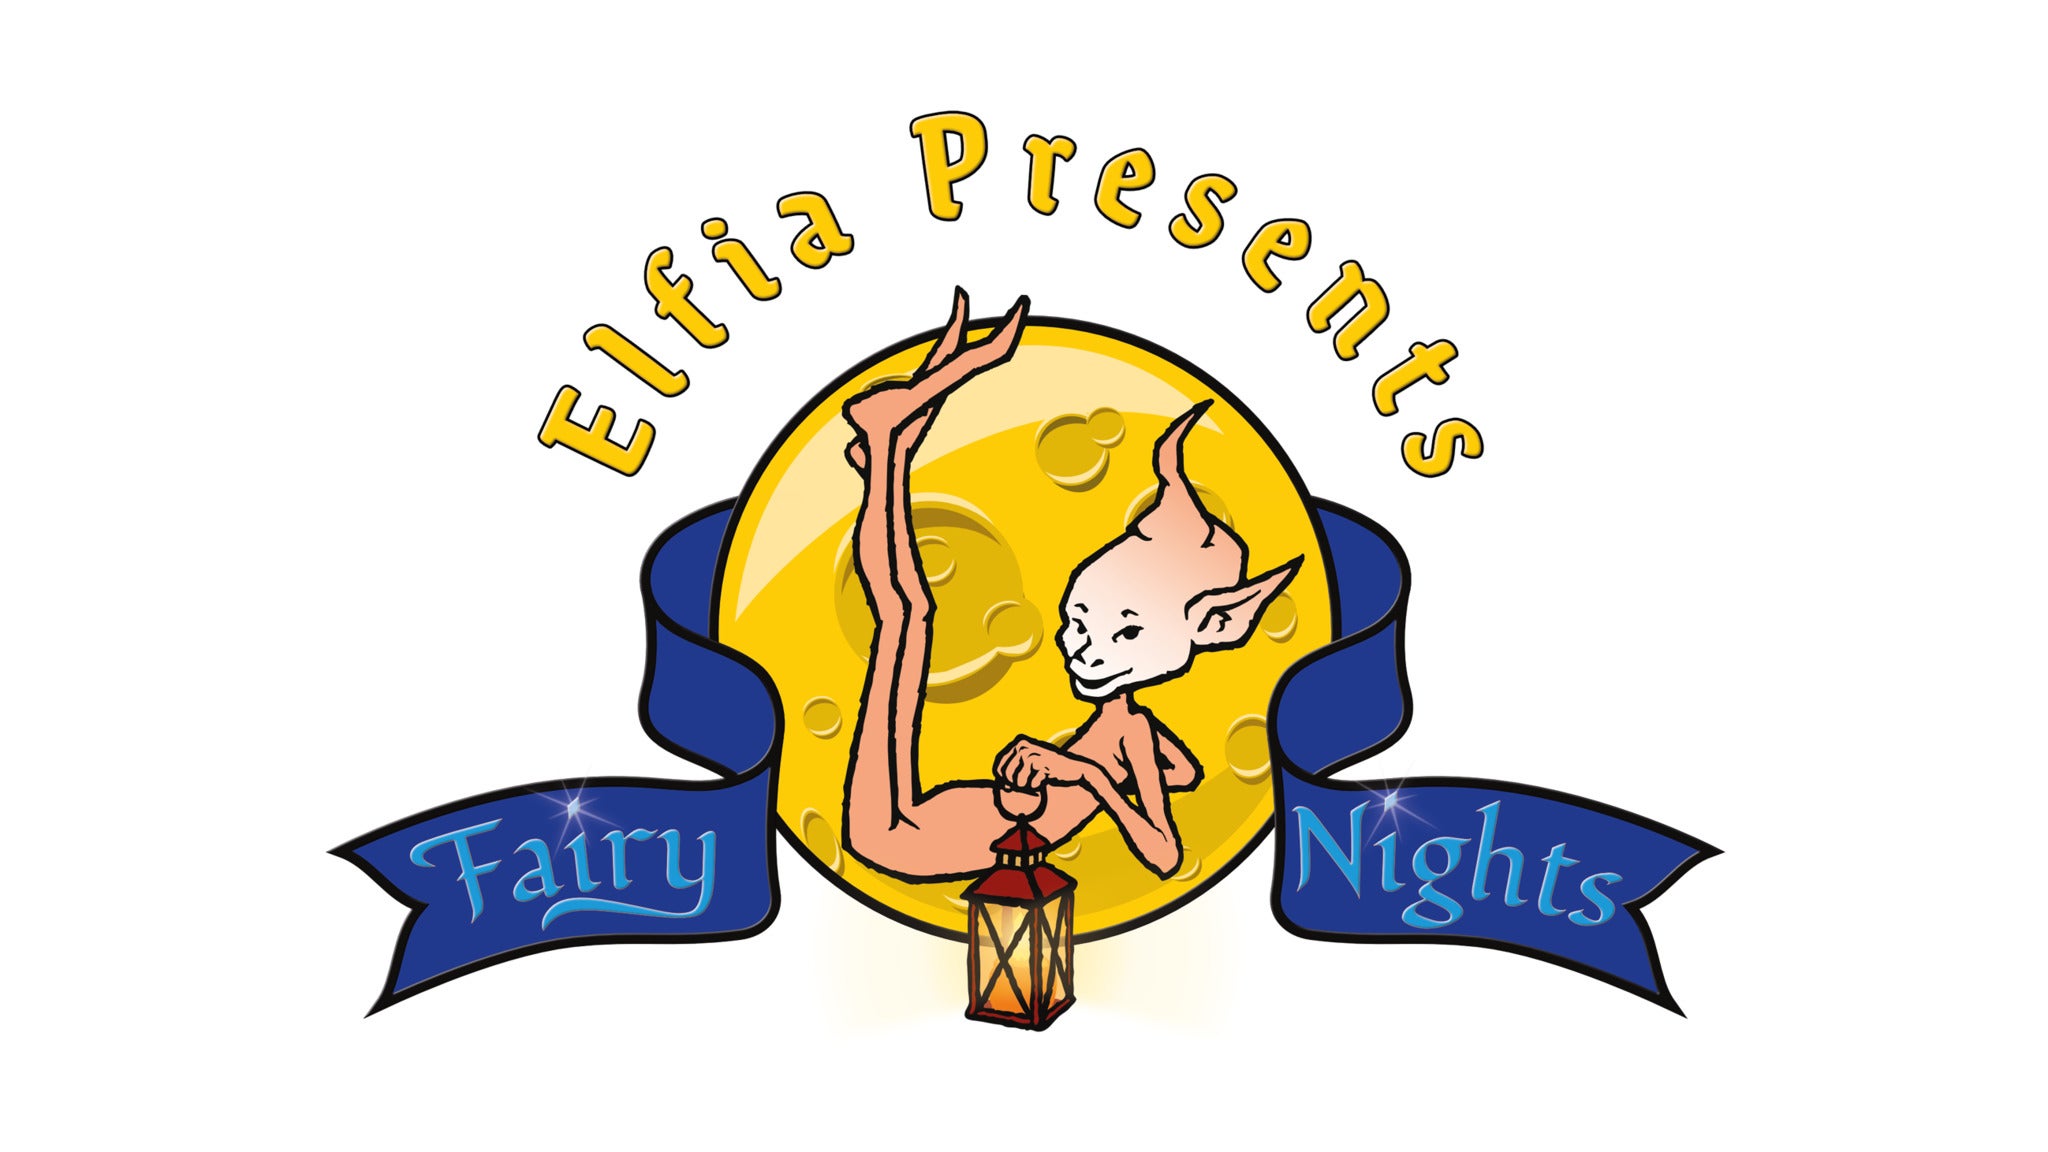 Elfia Presents: Fairy Nights Haarzuilens 2021 (Time slot 18:30-19:00)